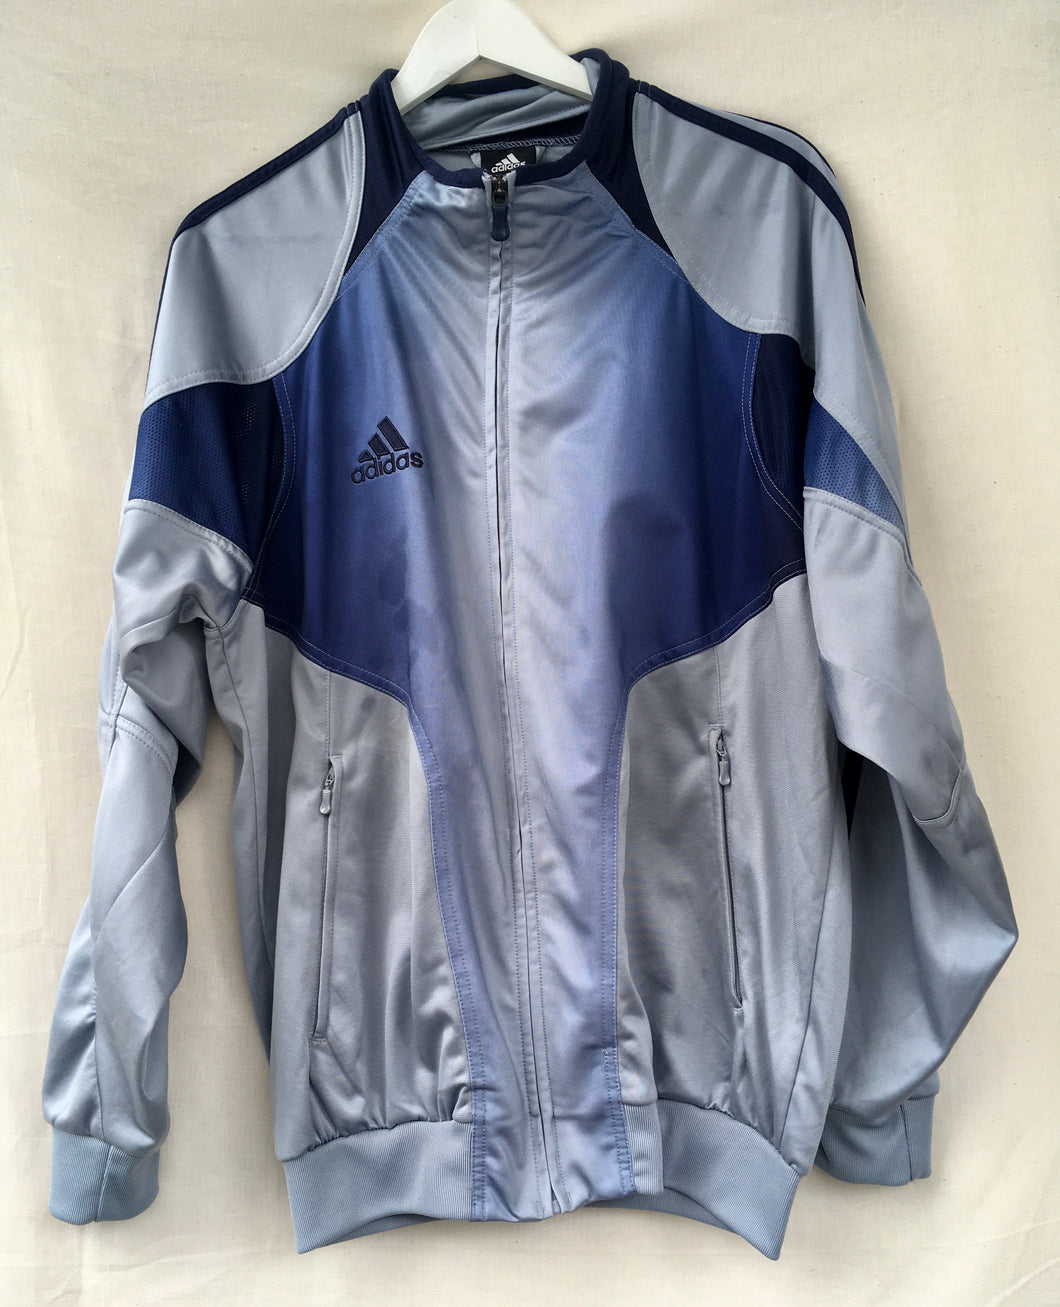 Adidas track jacket